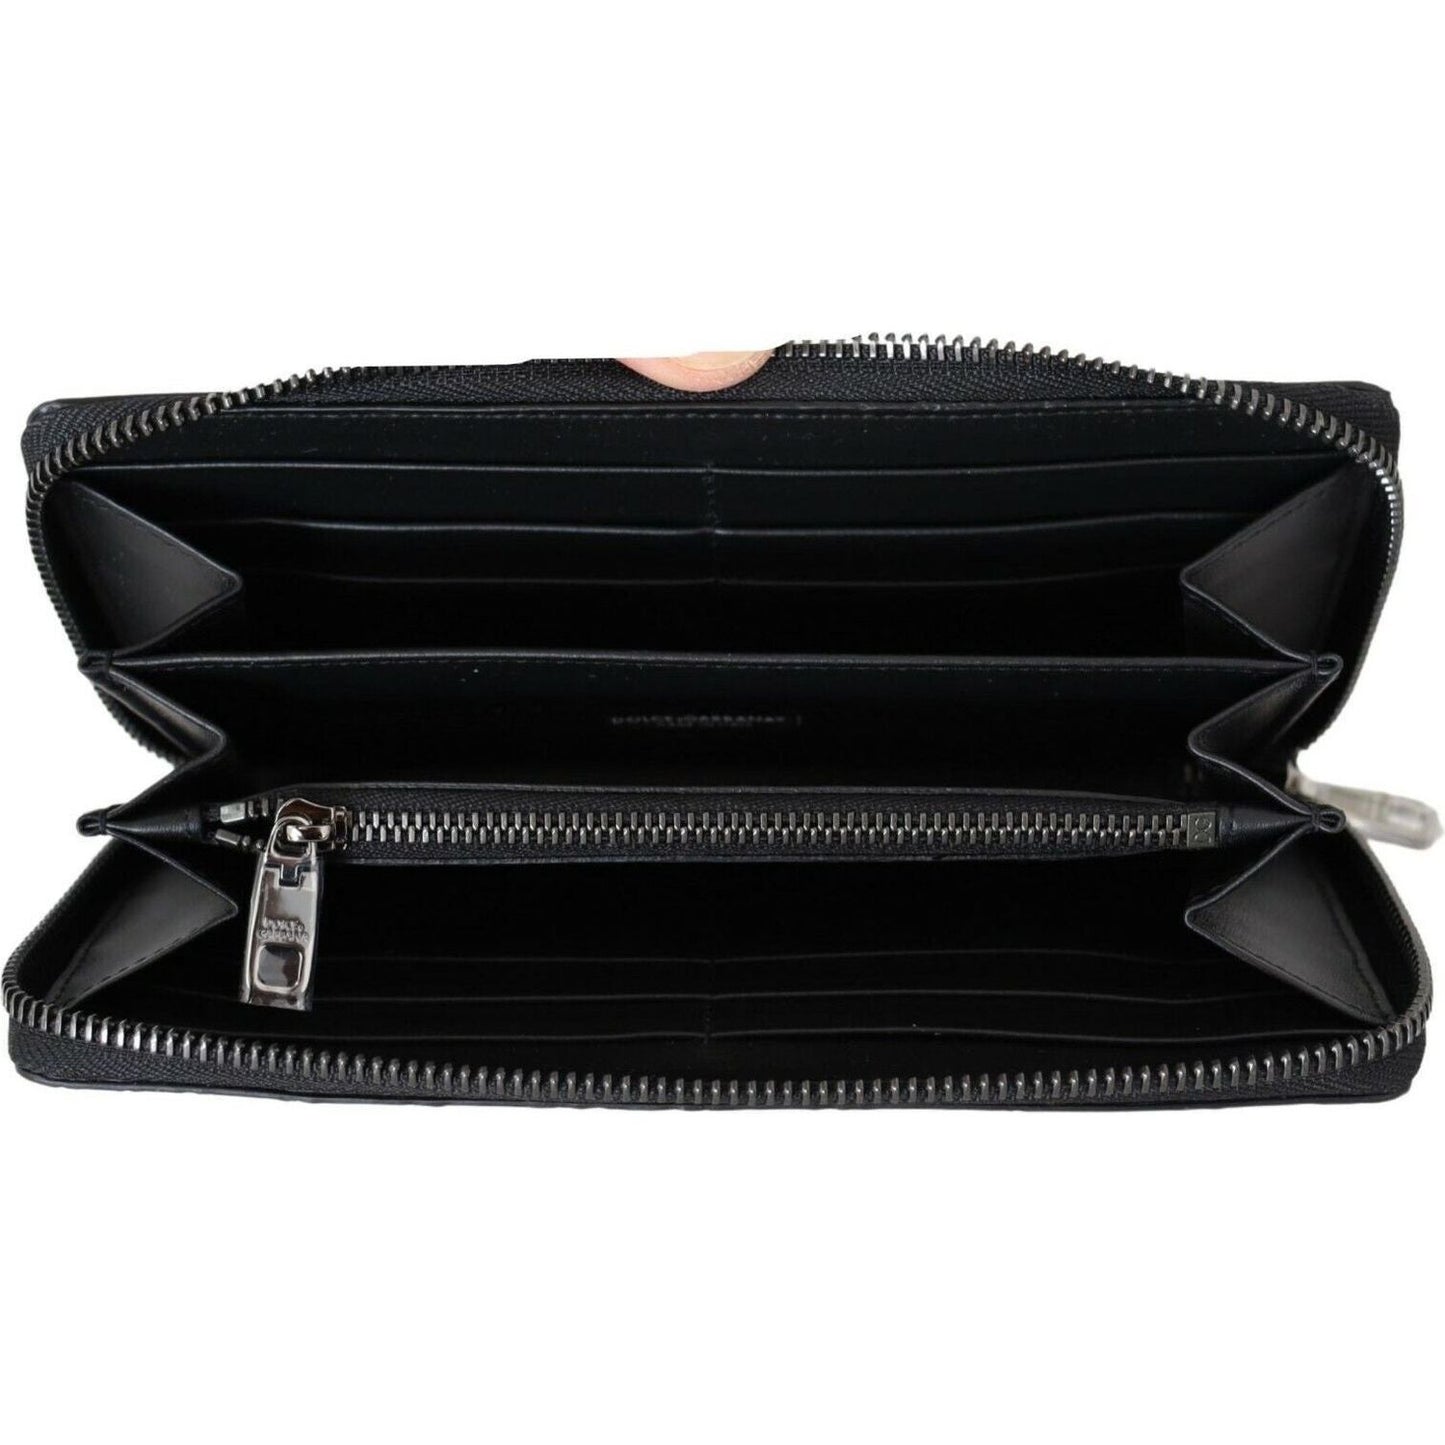 Dolce & Gabbana Elegant Textured Leather Continental Wallet black-zip-around-continental-clutch-exotic-leather-wallet